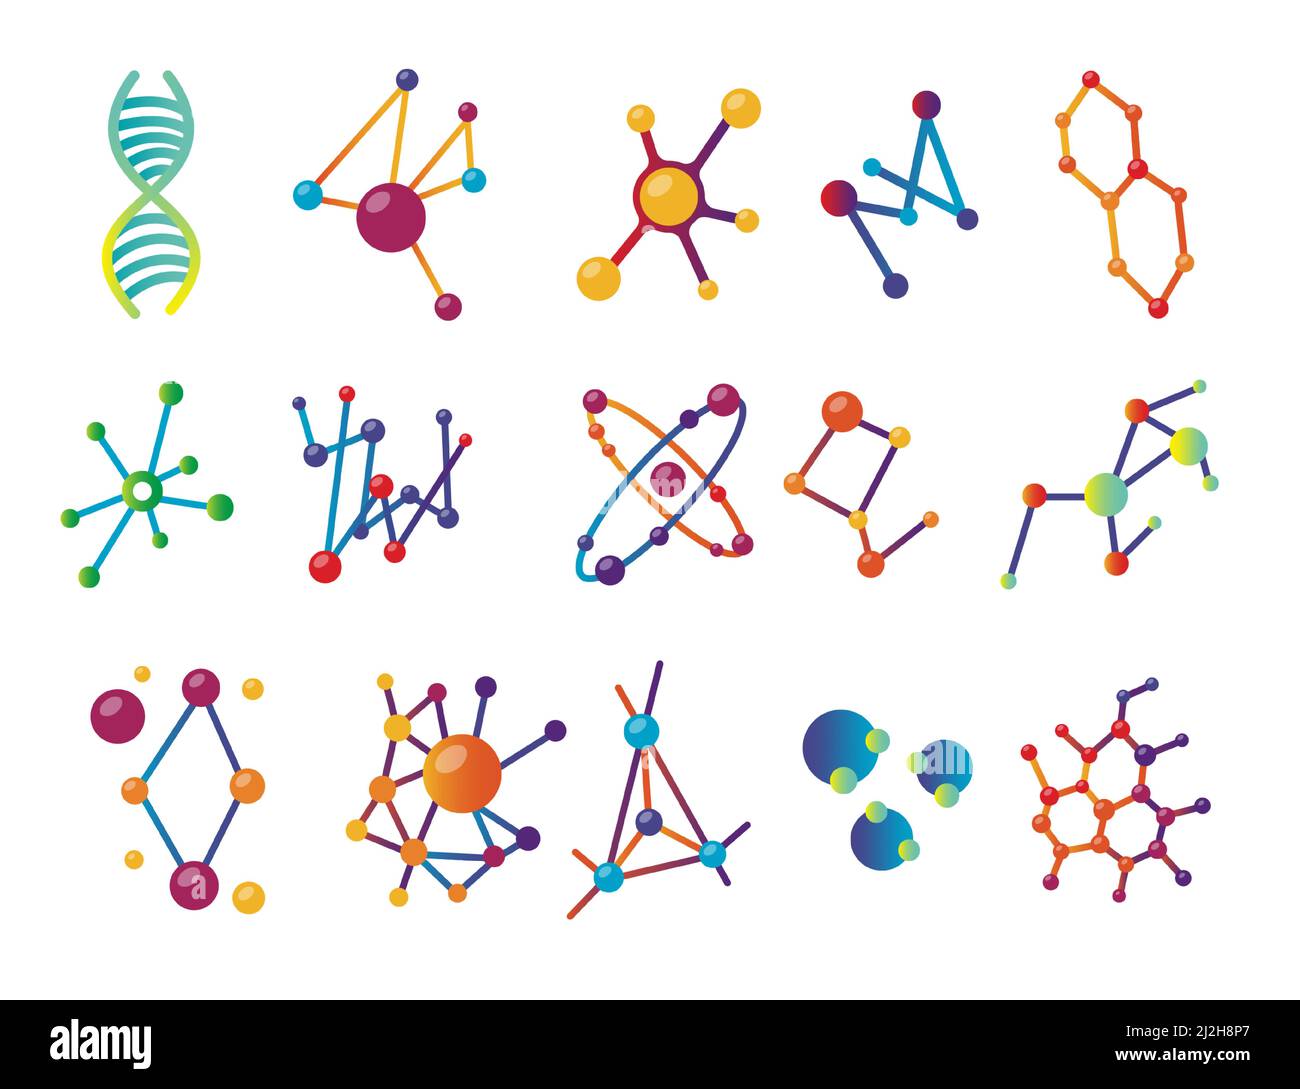 Satz von bunten Molekülen verschiedener Formen. Cartoon-Vektorgrafik. Molekulare Modelle, Konstruktionen, Verbindungen und atomare, Zellstrukturen. Stock Vektor